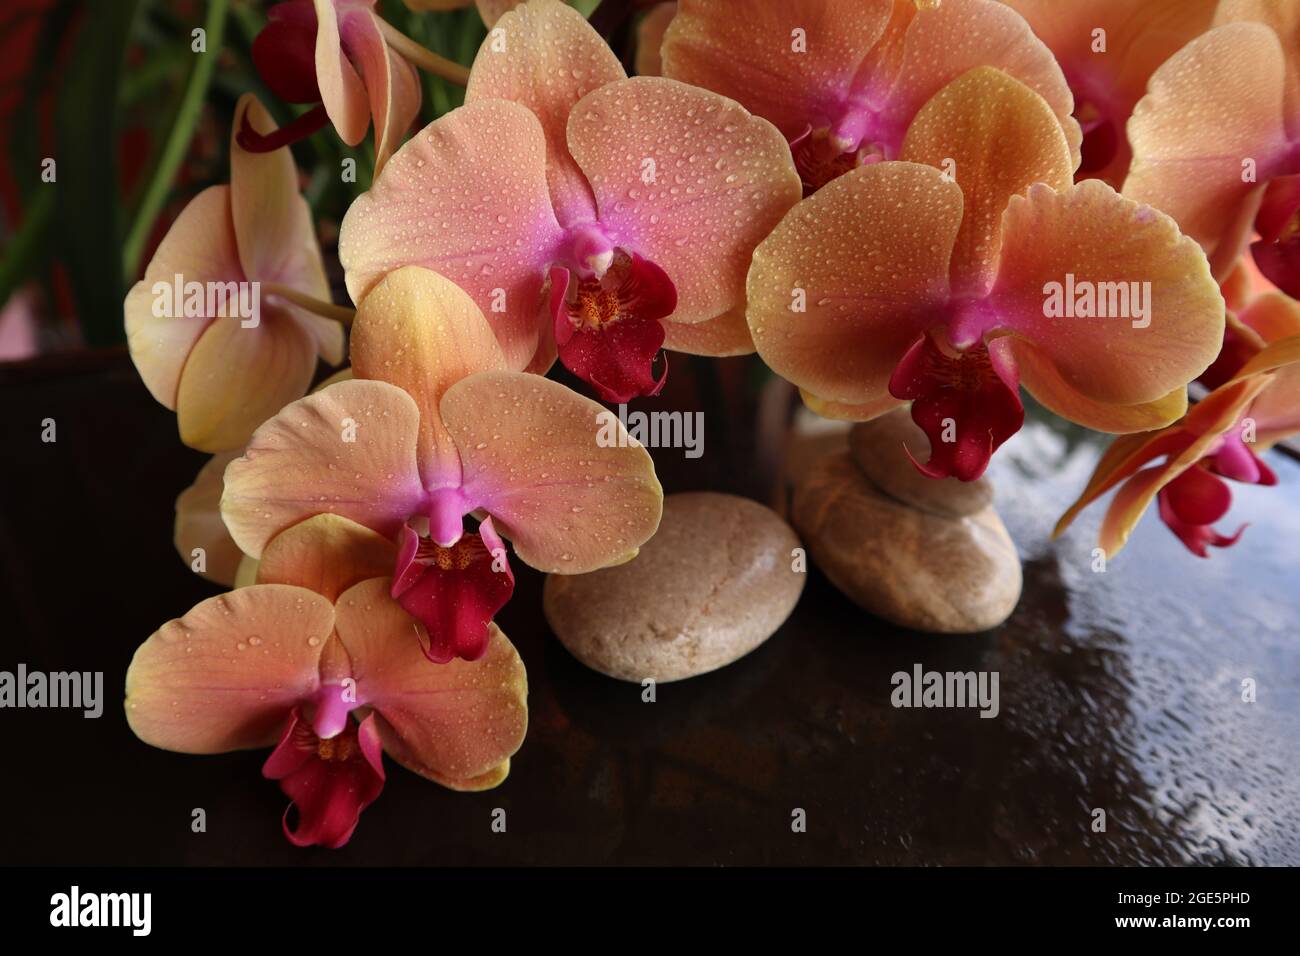 THE WORLD OF THE ORCHIDS, ORANGE FLOWERS PHALAENOPSIS Stock Photo